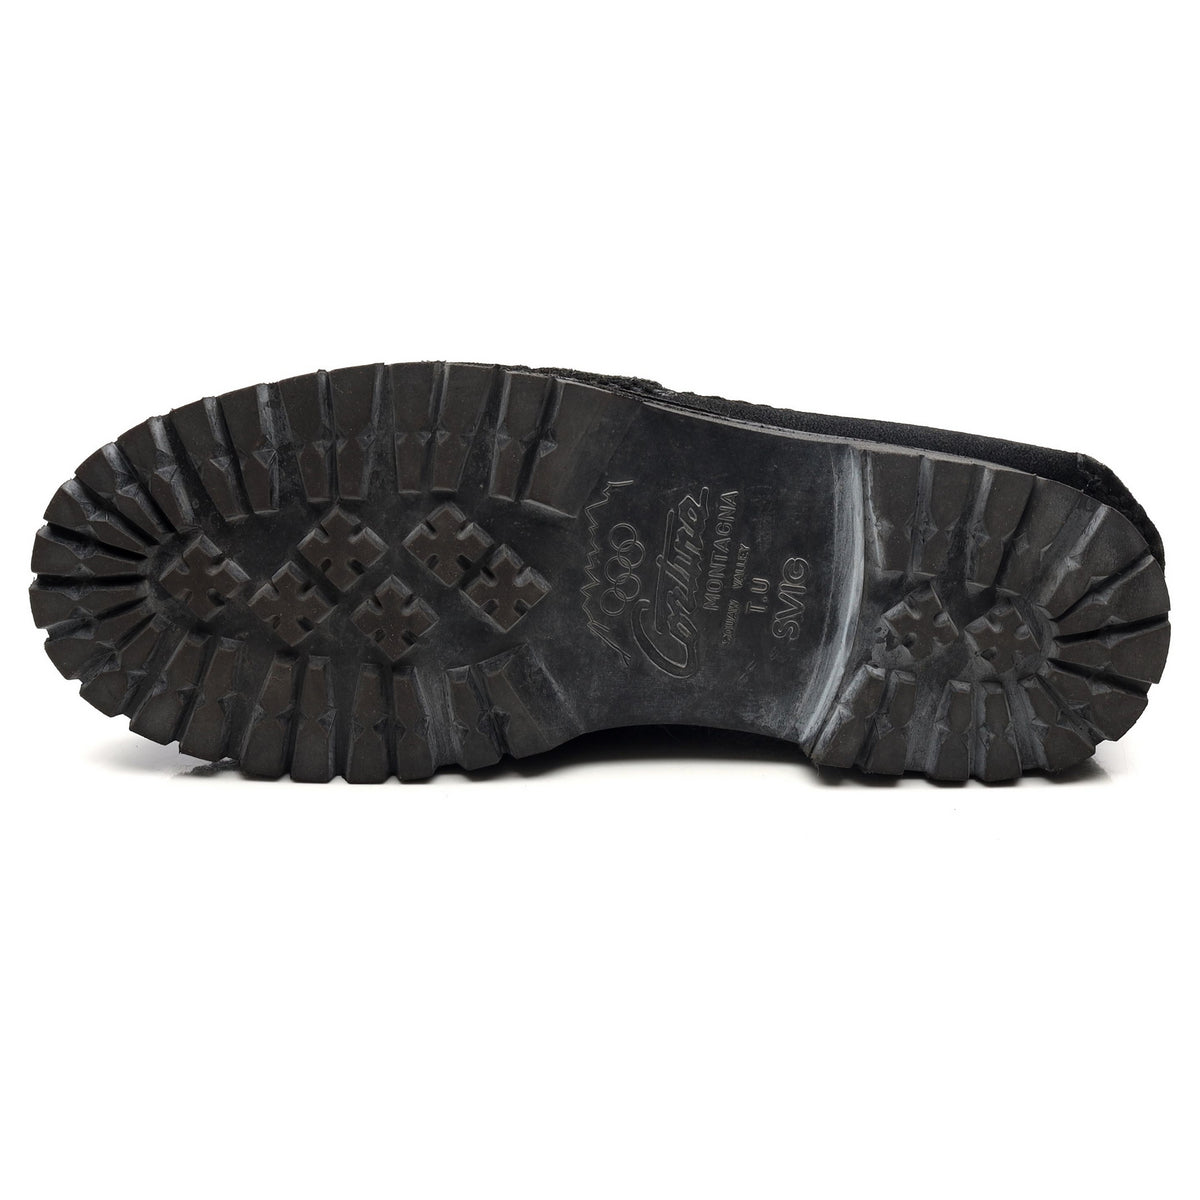 Black Suede Loafers UK 8 US 9